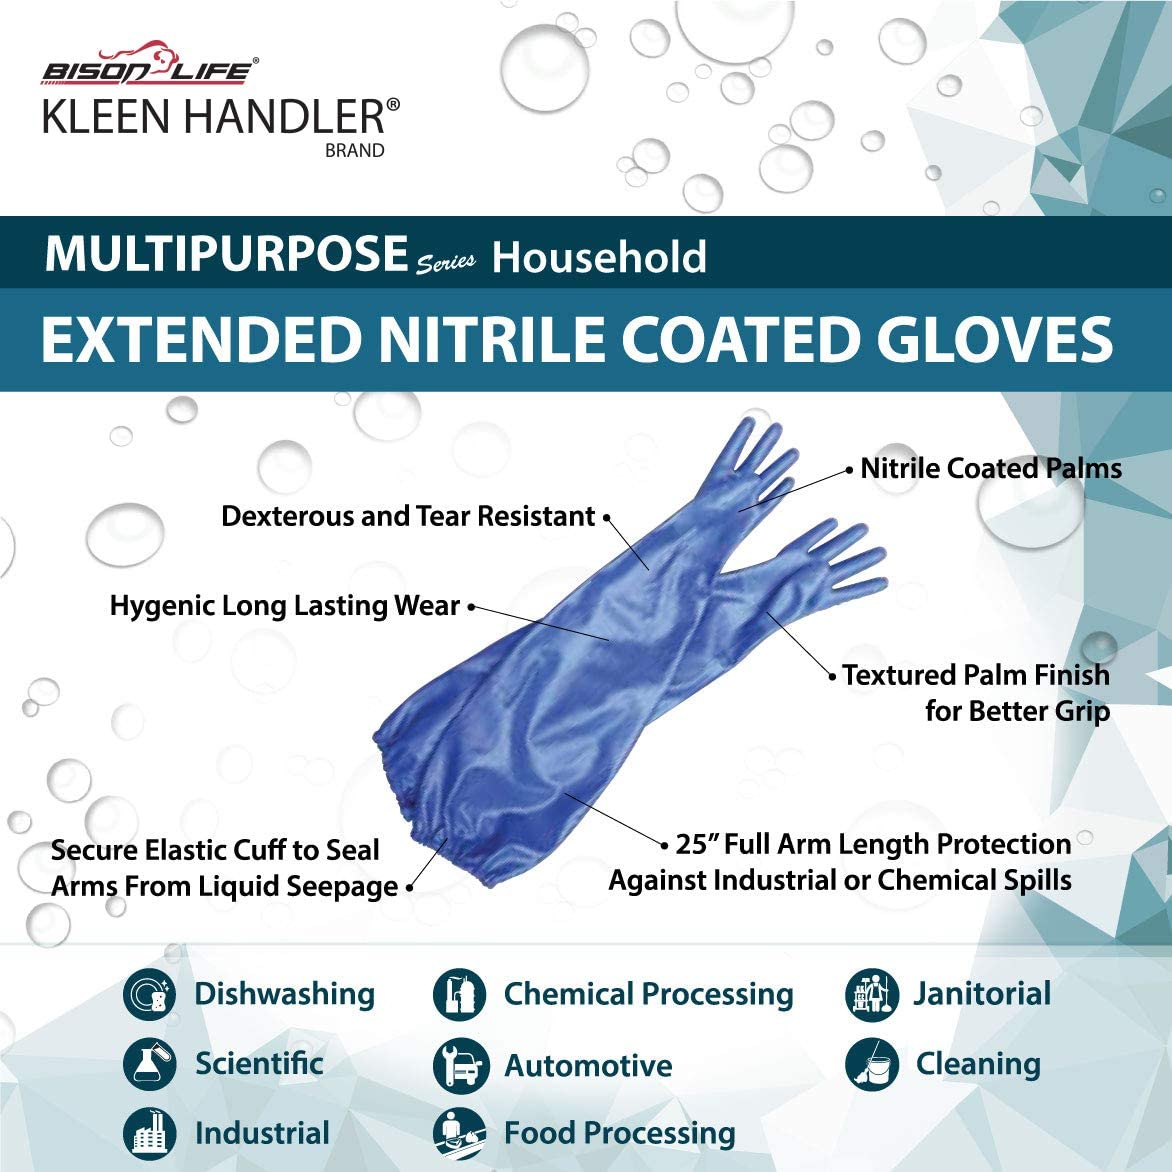 Safe Handler Nitrile Red/Black OSFM Grip Work Gloves (Pack of 12-Pairs)